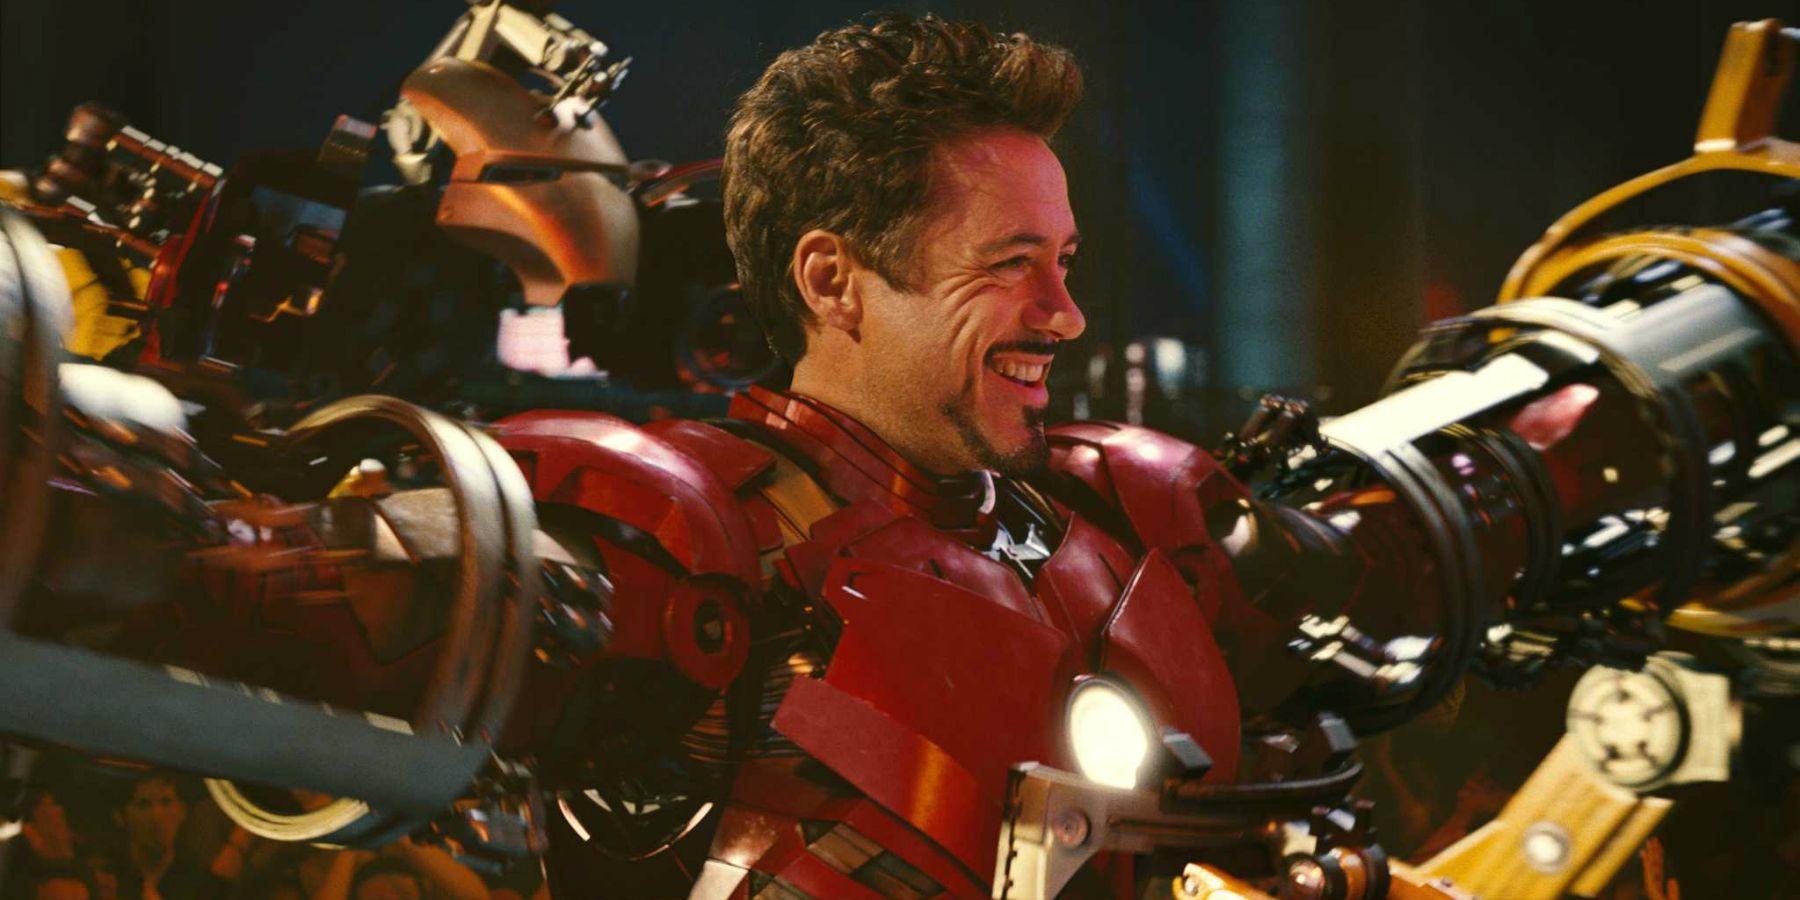 Robert Downey Jr as Tony Stark in Iron Man 2